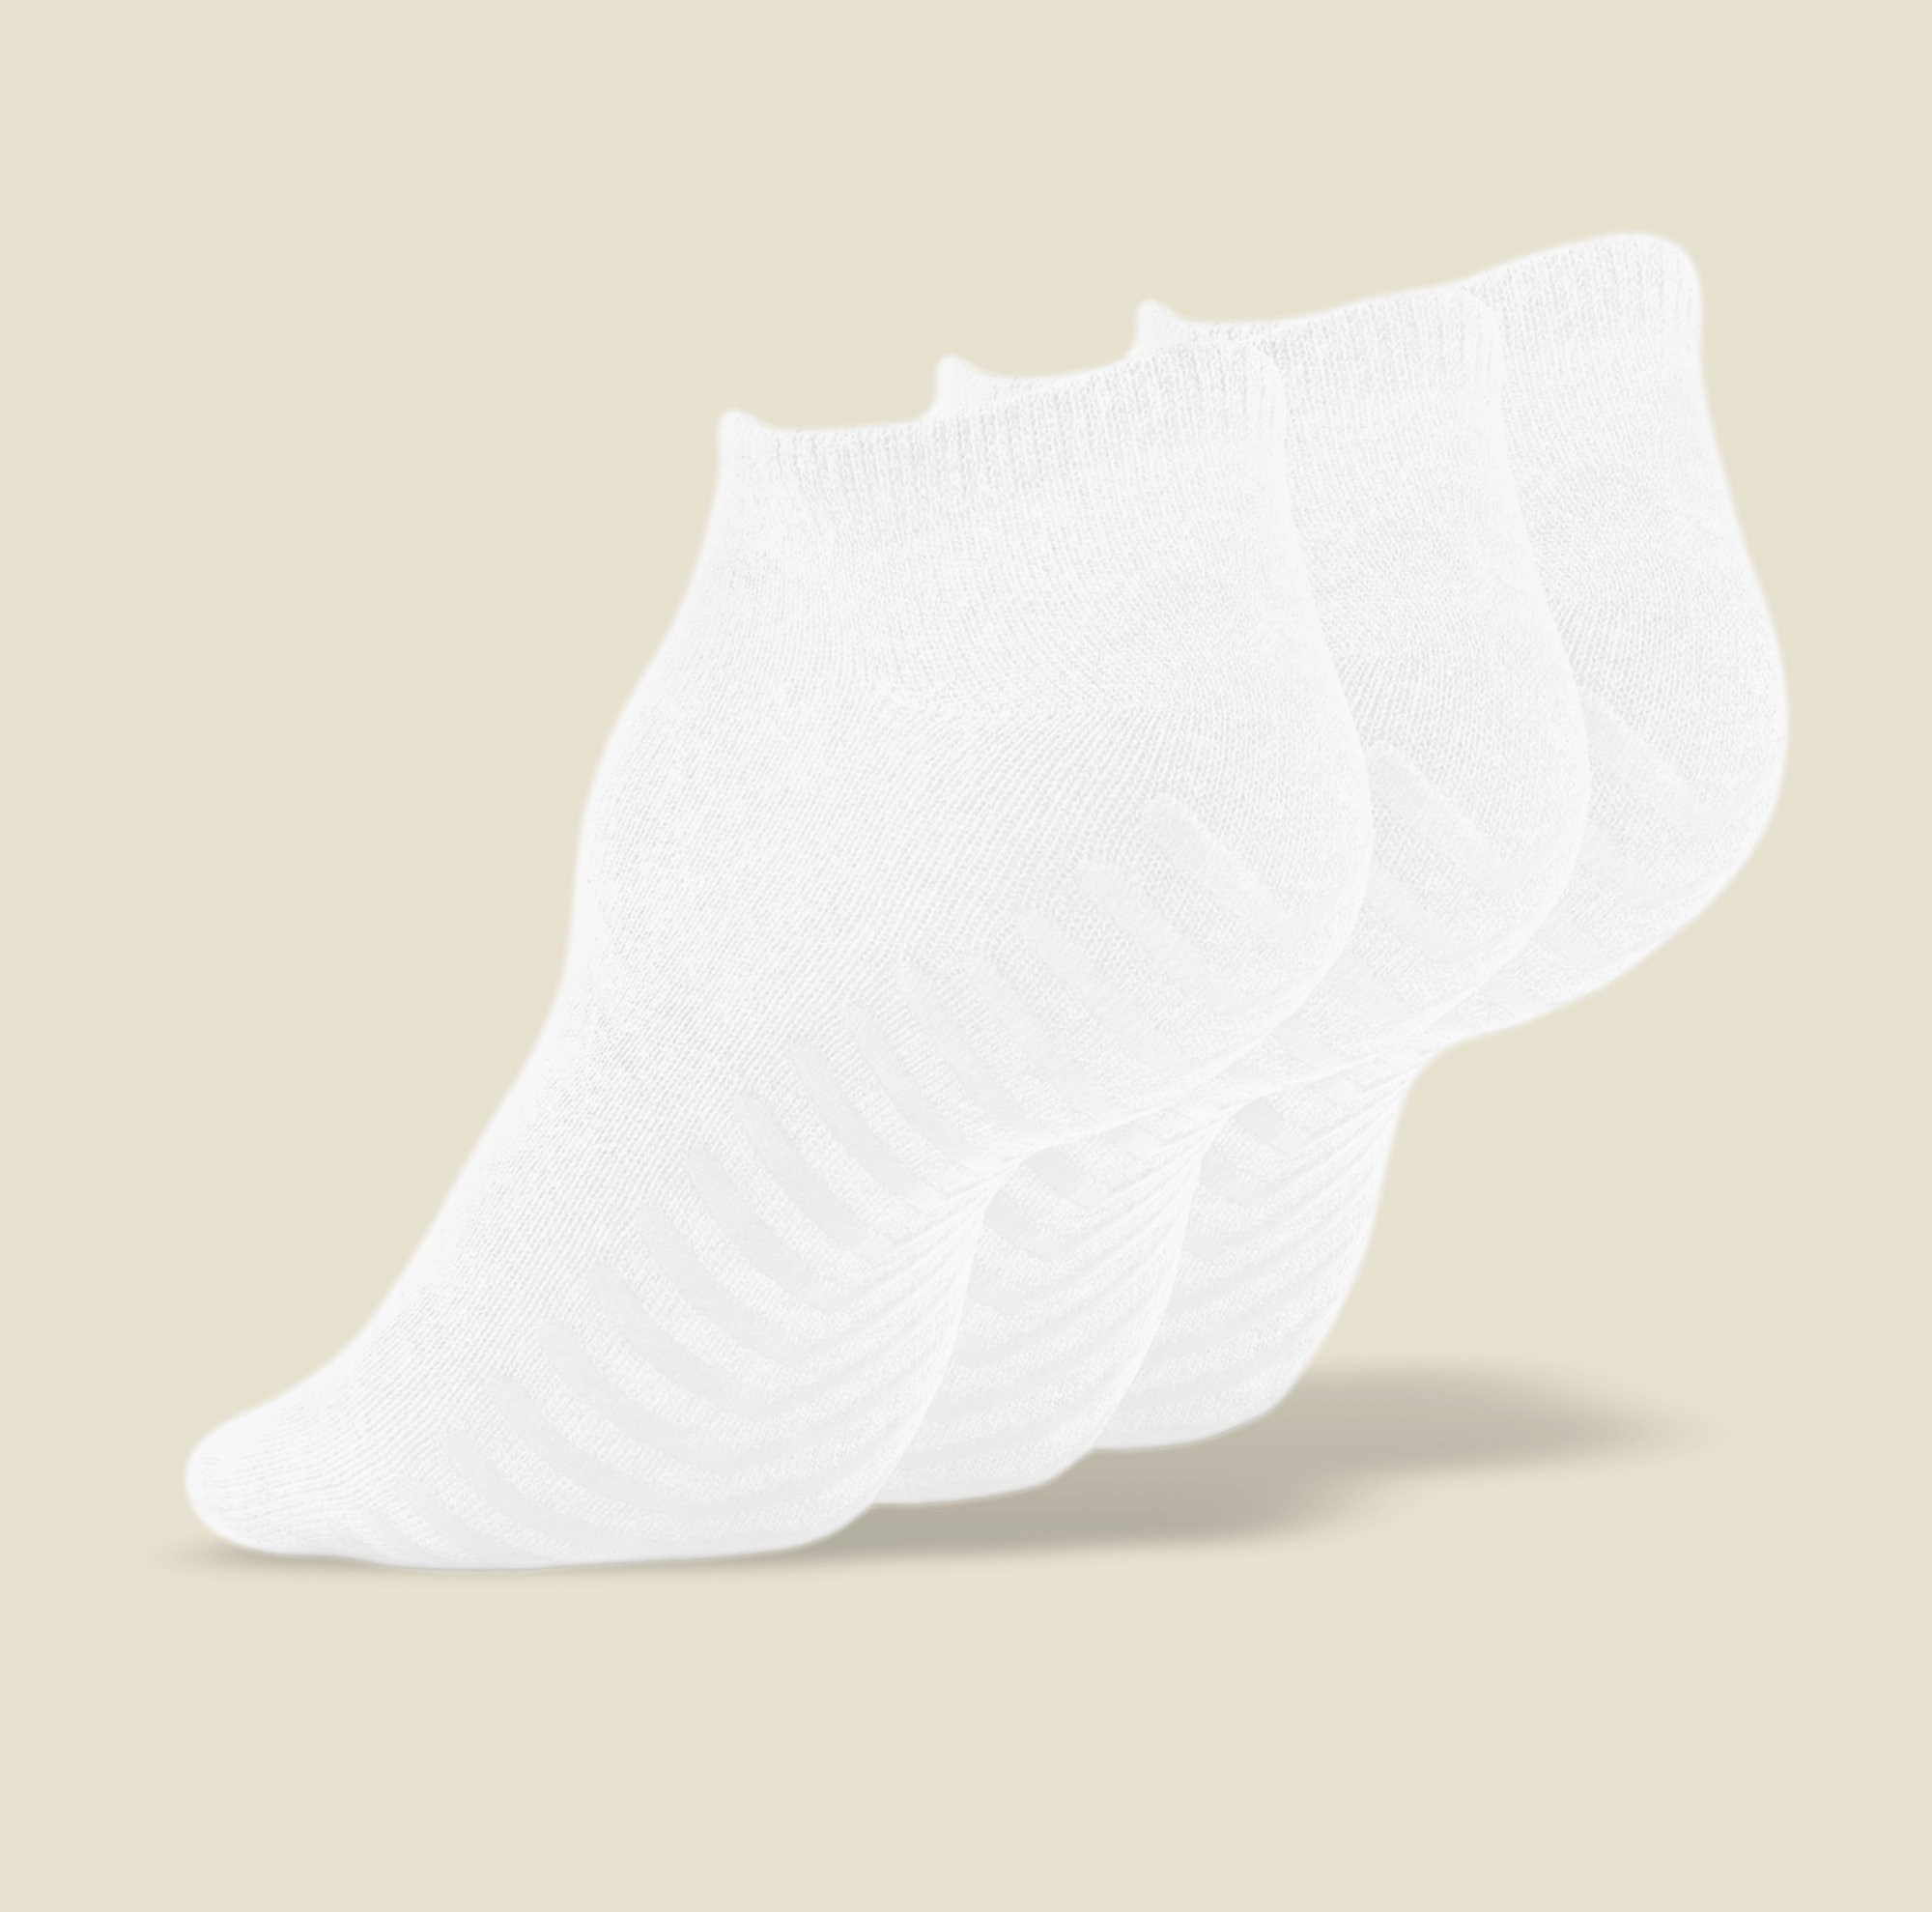 Men's White Low Cut Ankle Grip Socks - 3 pairs - Gripjoy Socks